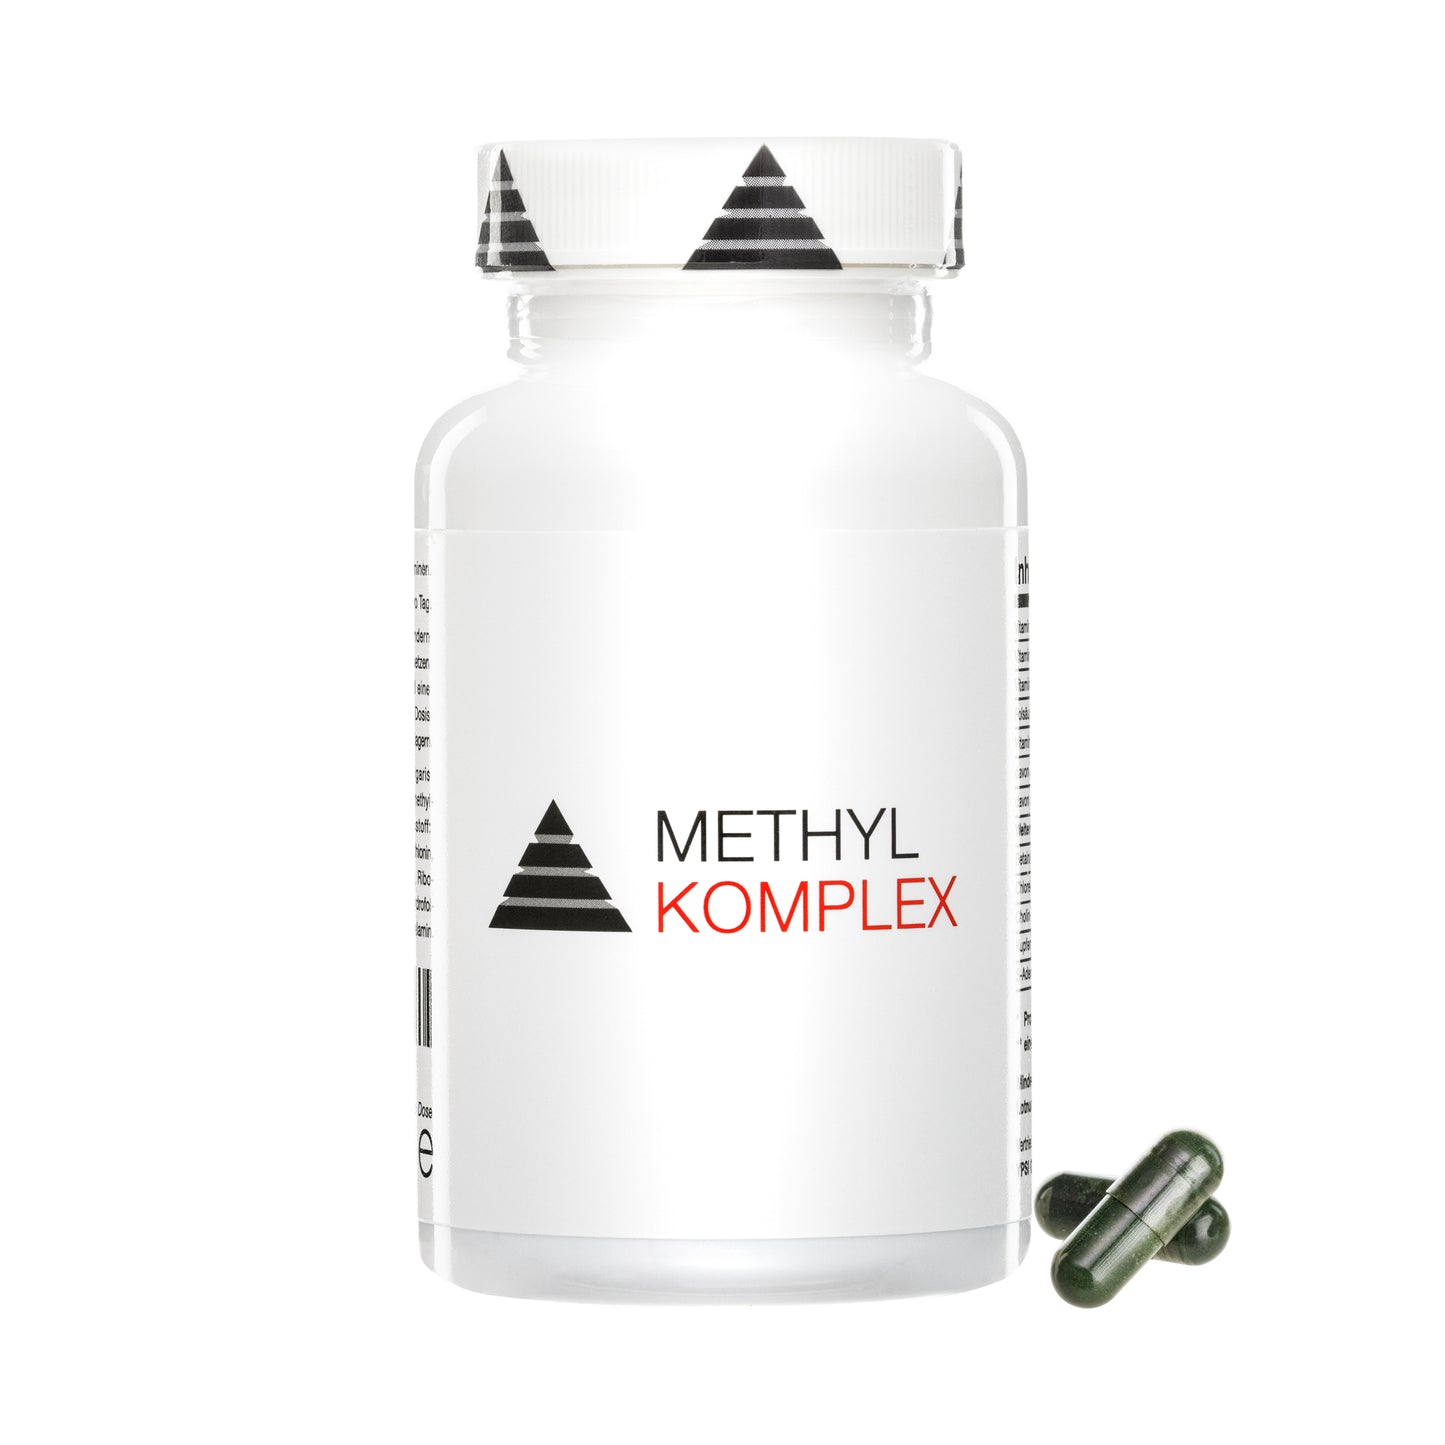 YPSI Methyl Komplex